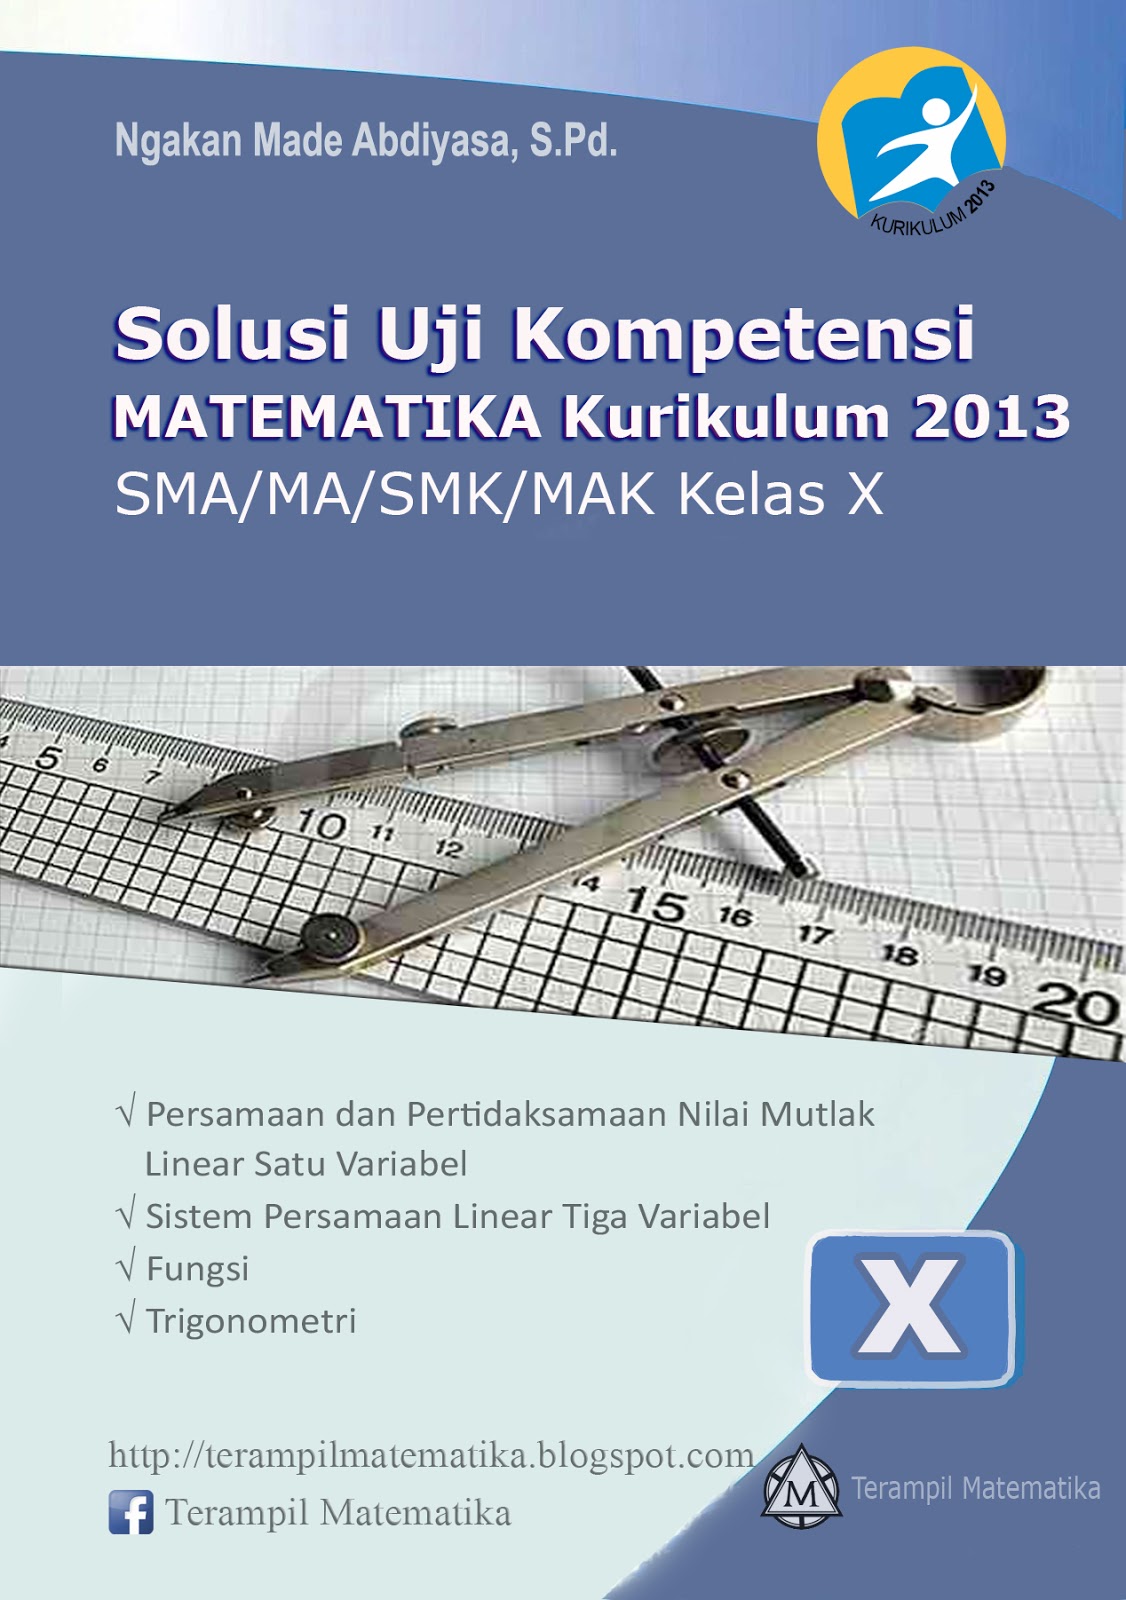 Pembahasan Soal Buku Matematika Kelas 10 Kurikulum 2013 - IlmuSosial.id